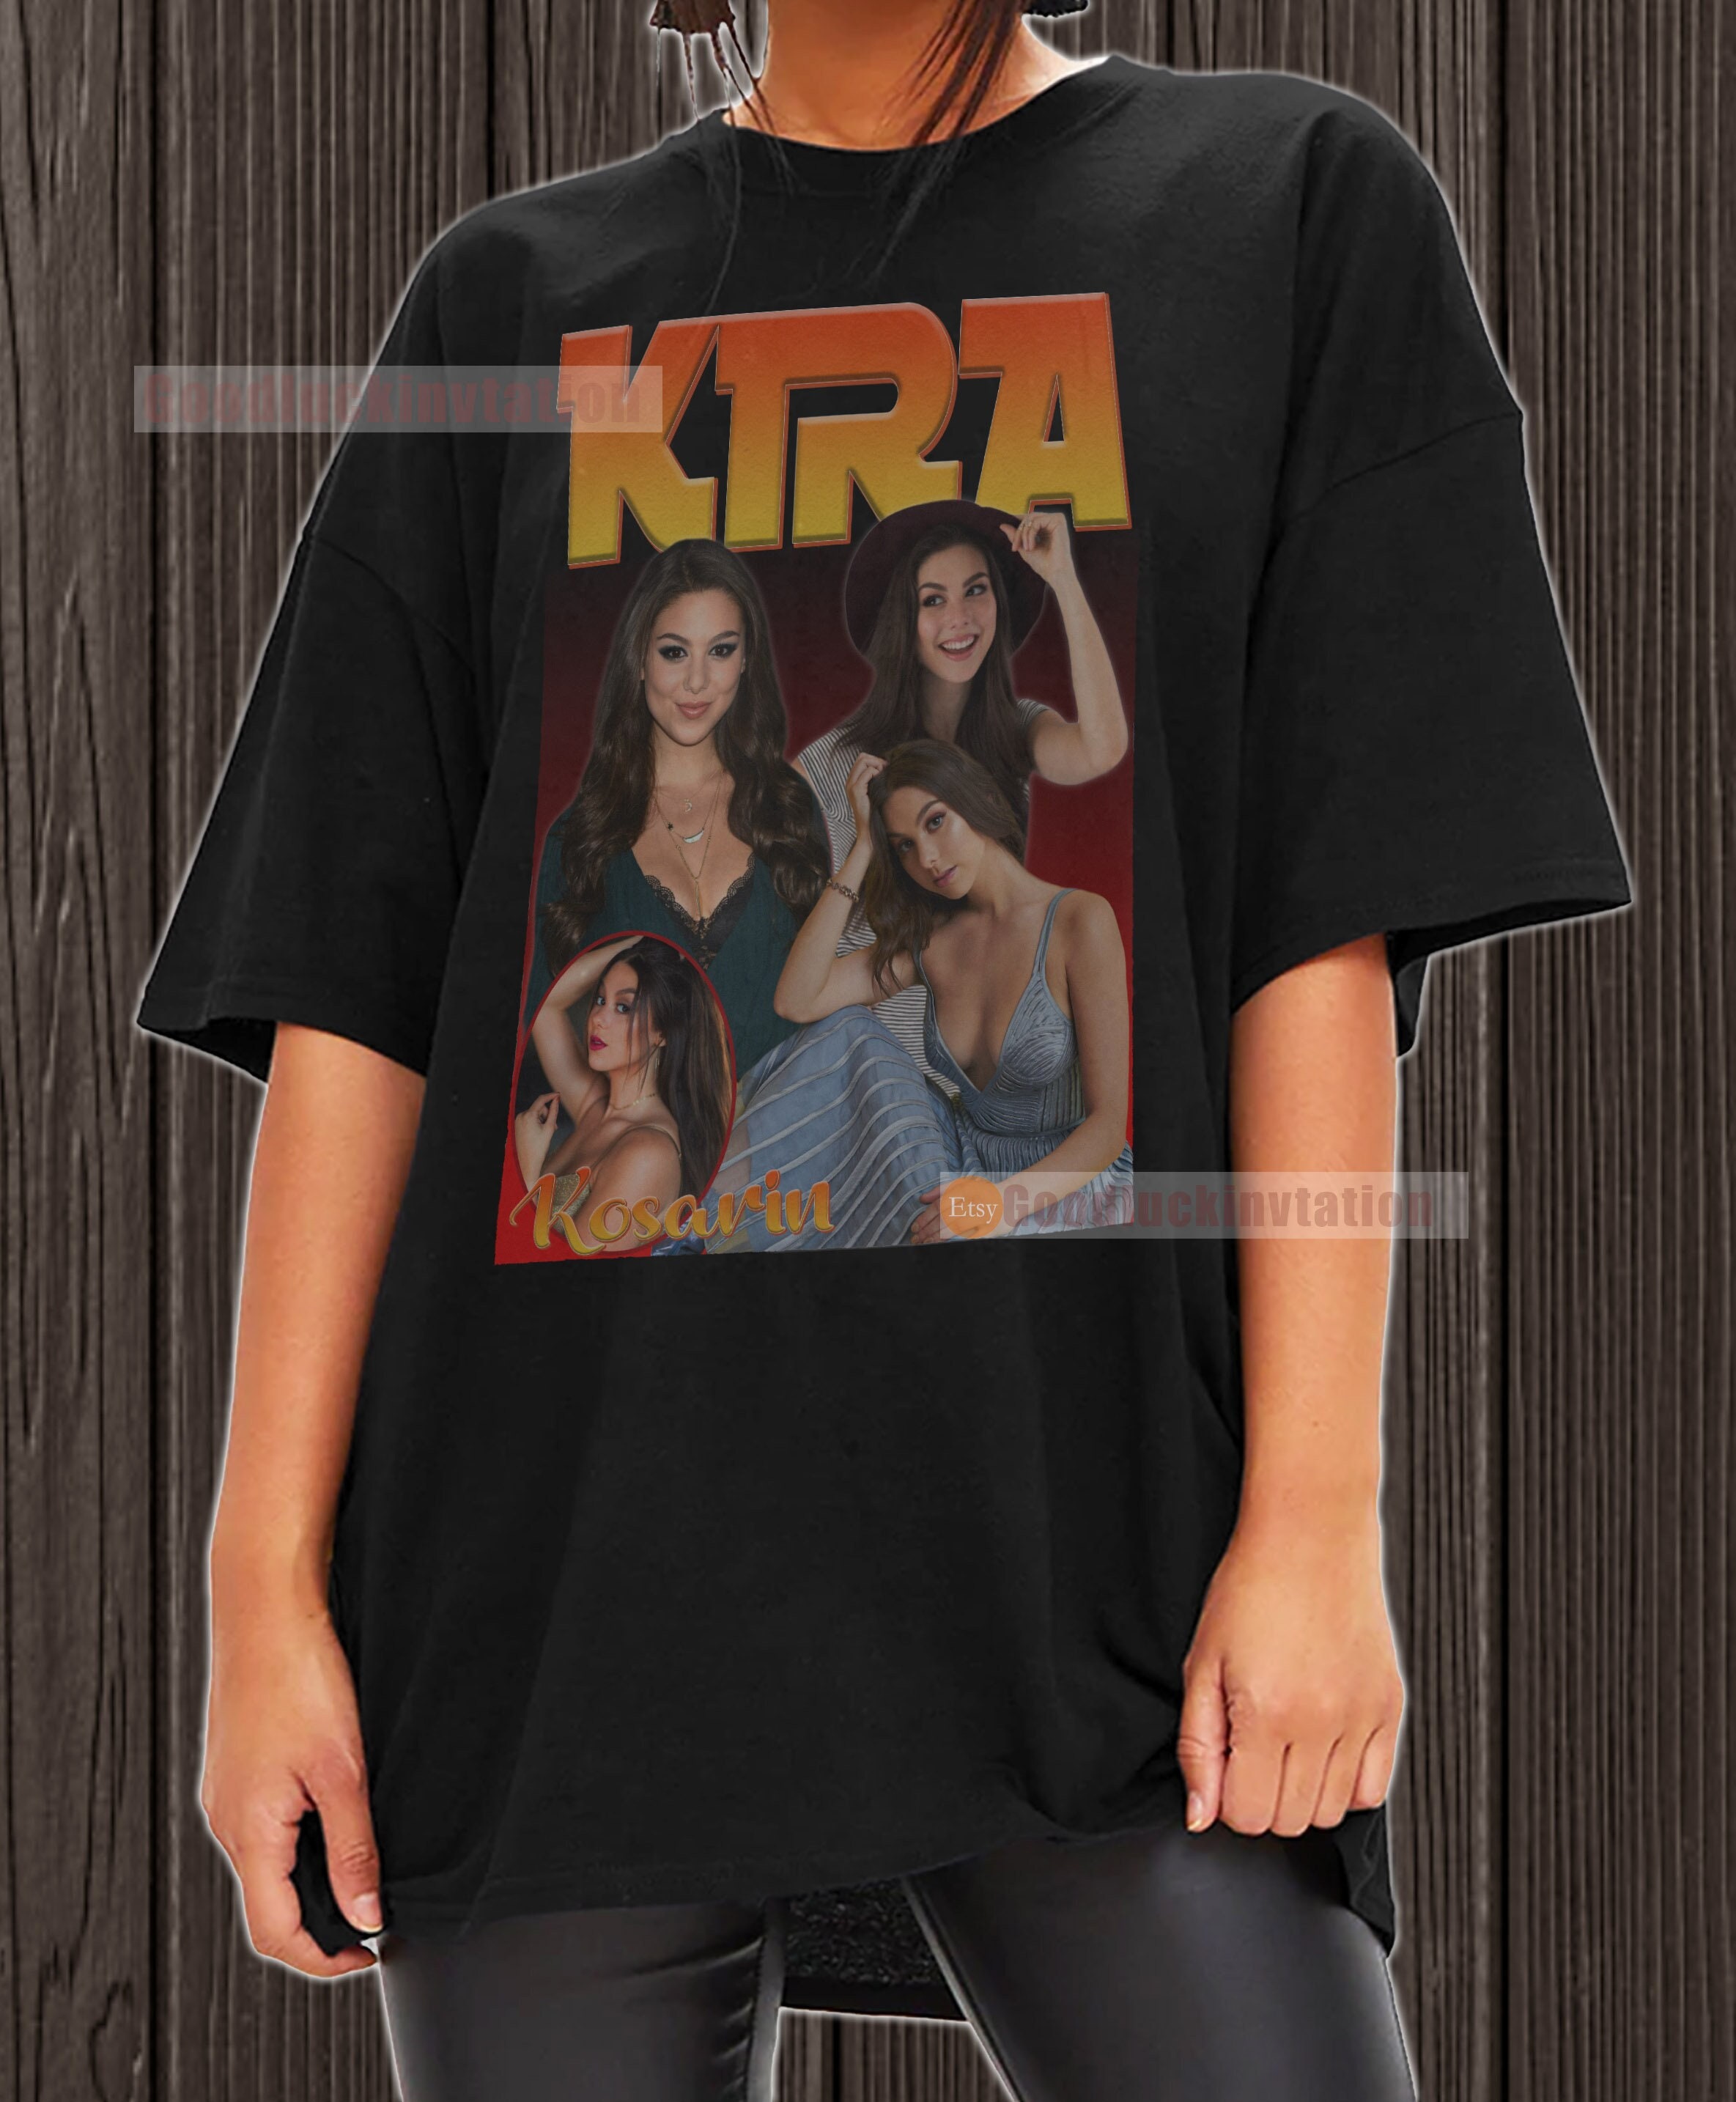 Kira Kosarin Shirt T-shirt Cotton Vintage 90's -